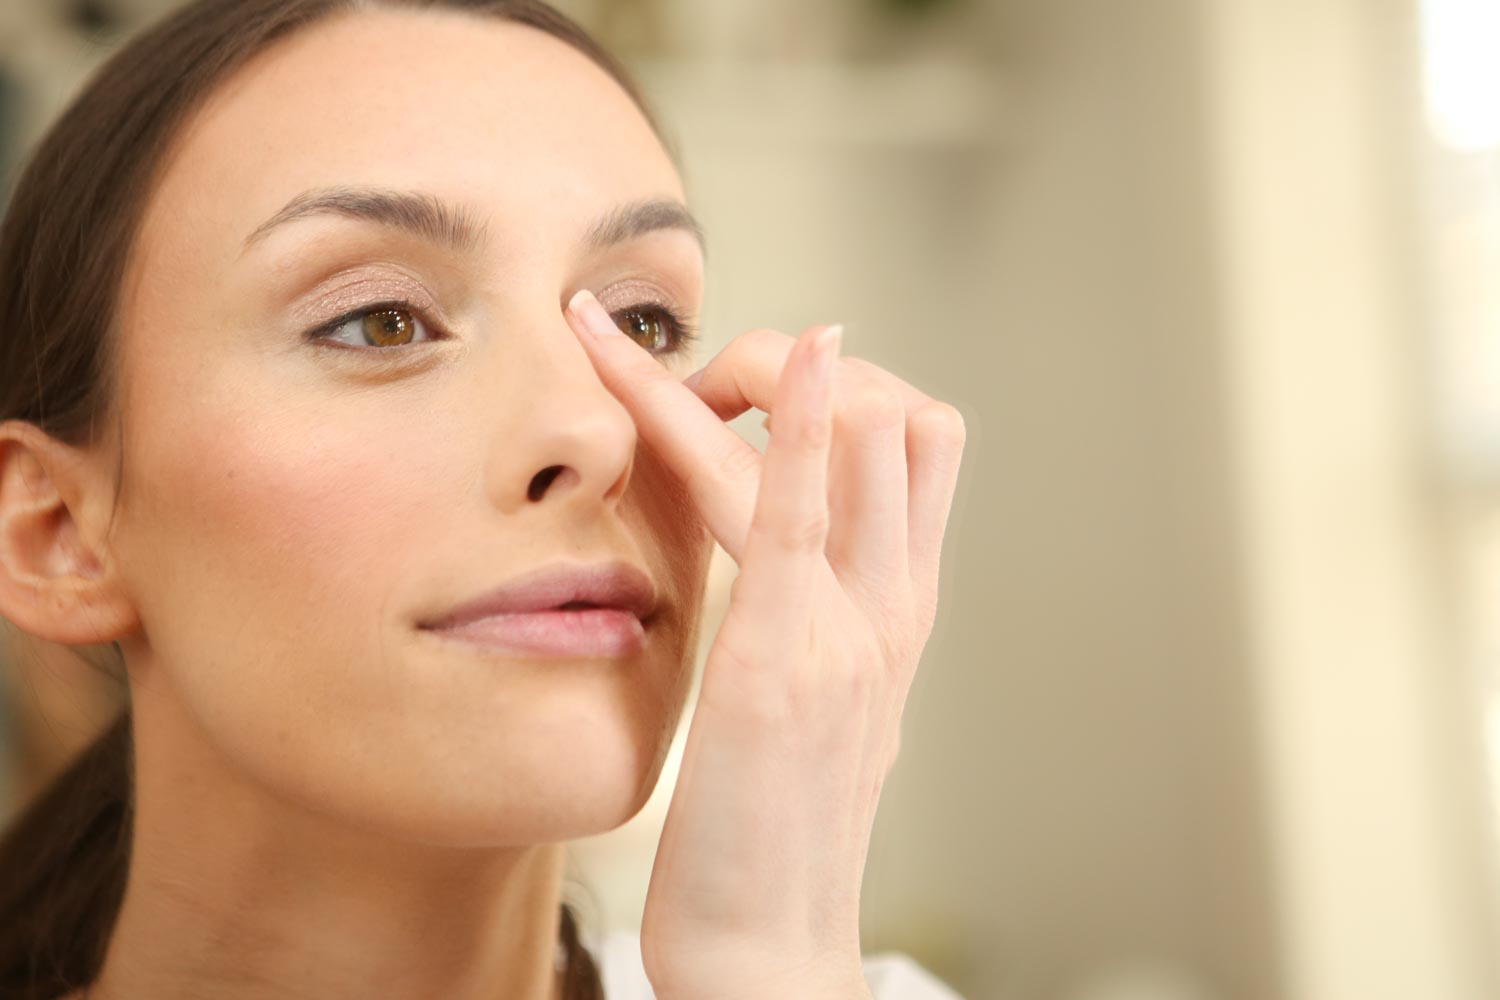 ExternalLink 4 Eye Concealers beauty advice by Kristina Gasperas